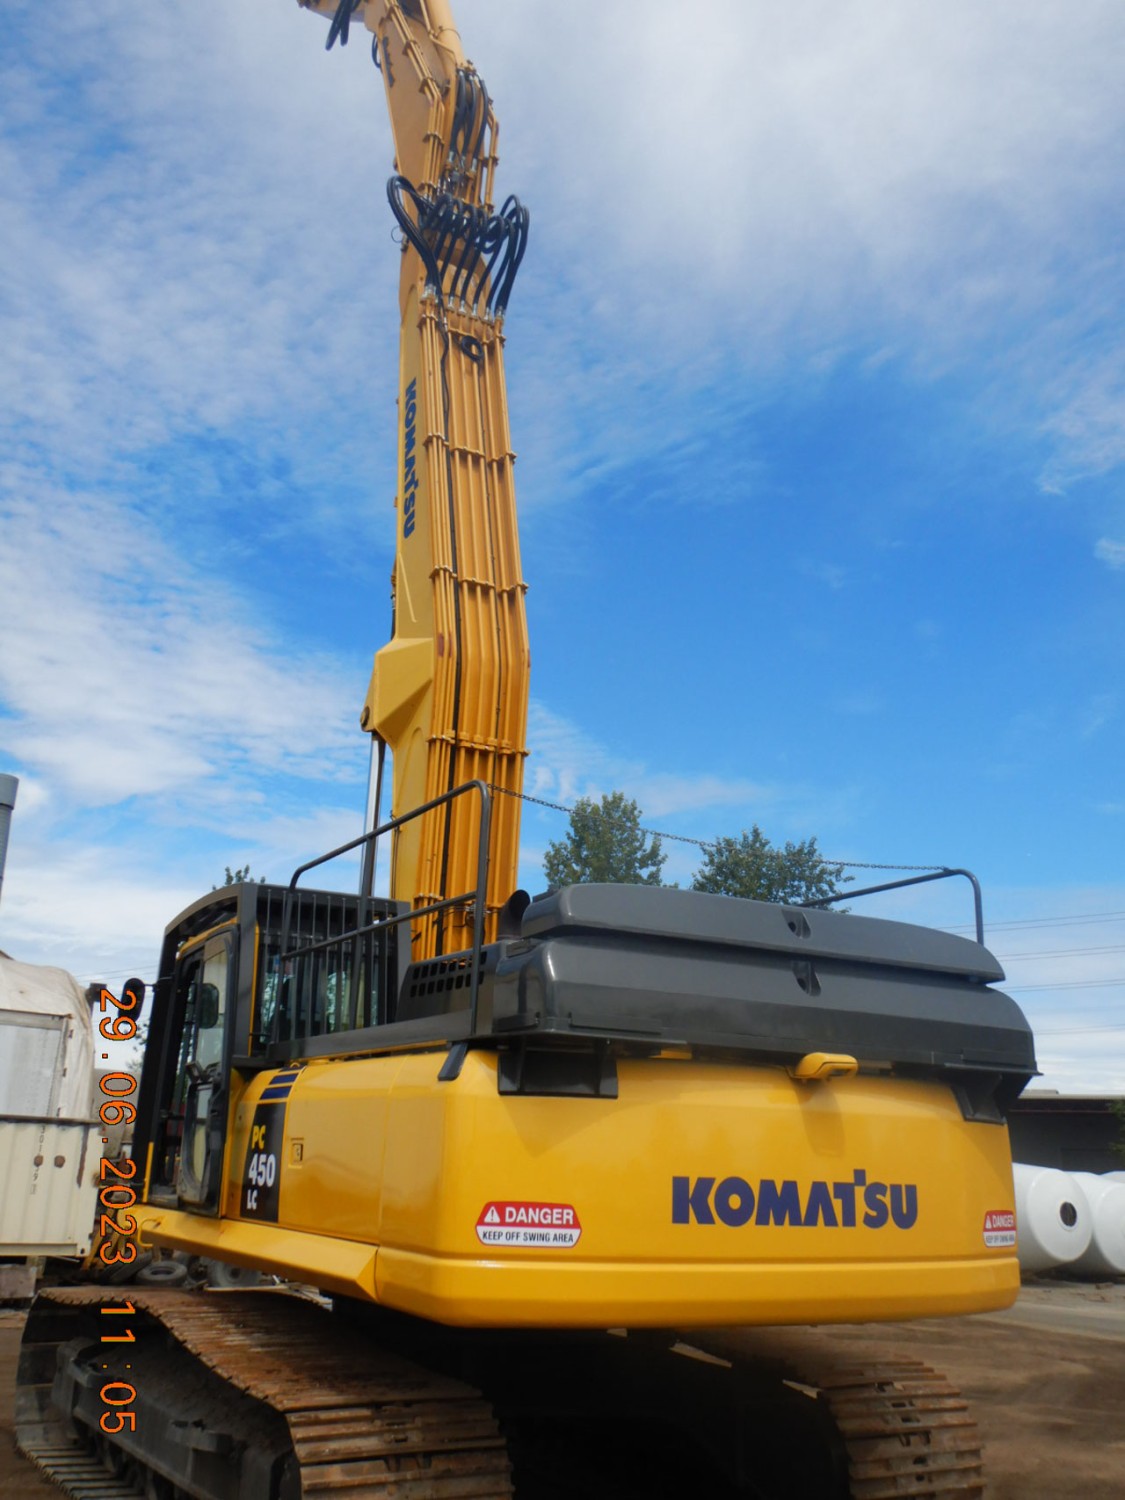 custom-130000000-komatsu-pc450-lc-8-complete-rebuild-custom-all-komatsu-3-stage-boom-60-70-foot-long-reach-pile-driver-demolition-excavator-big-7